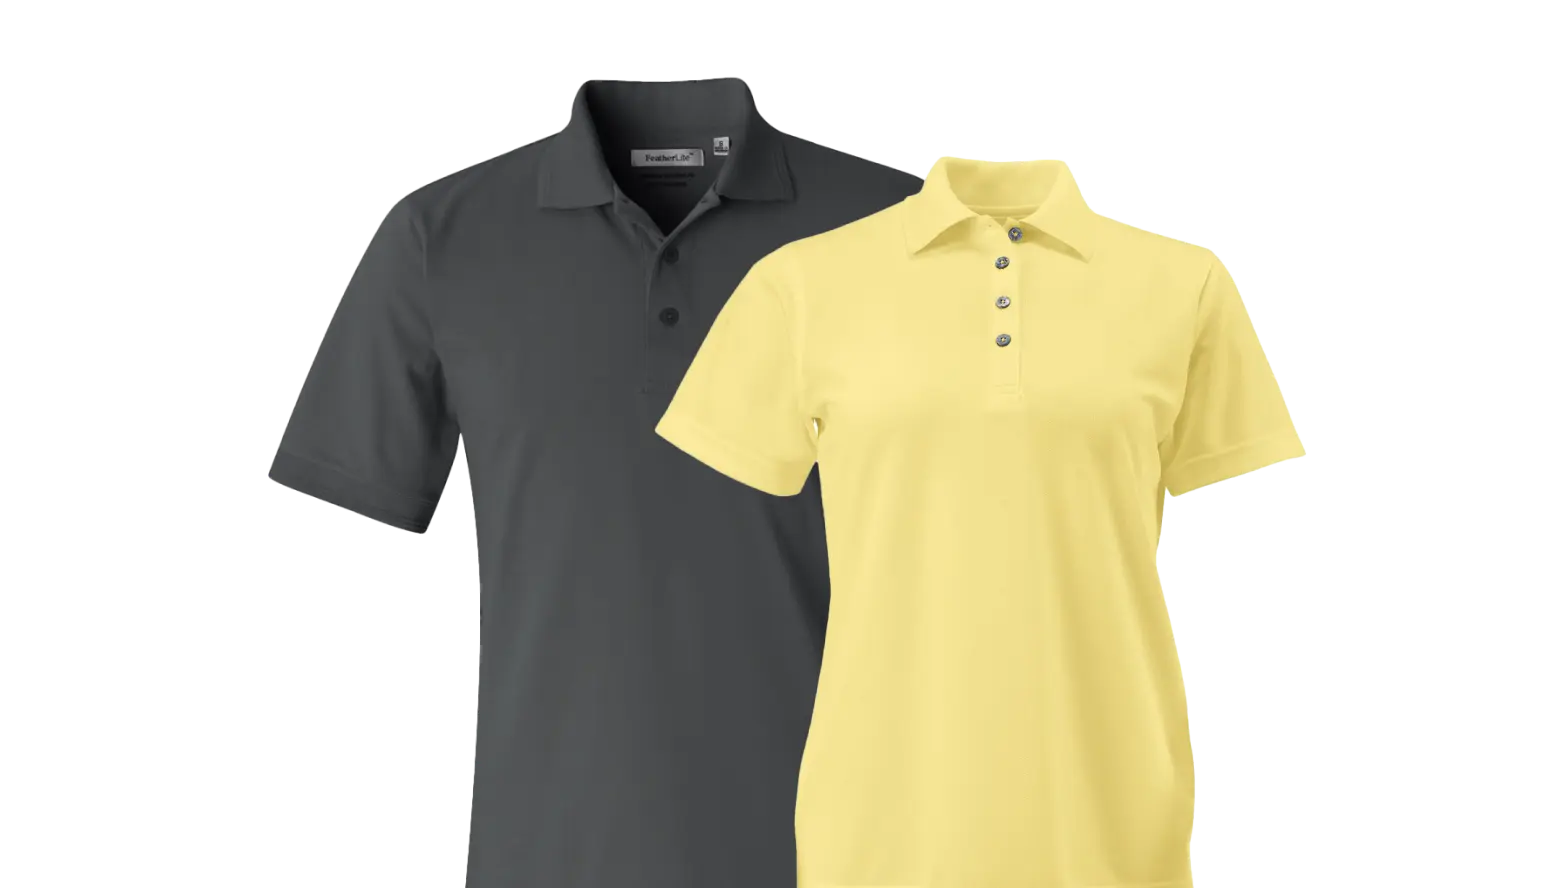 Black and yellow polo shirts